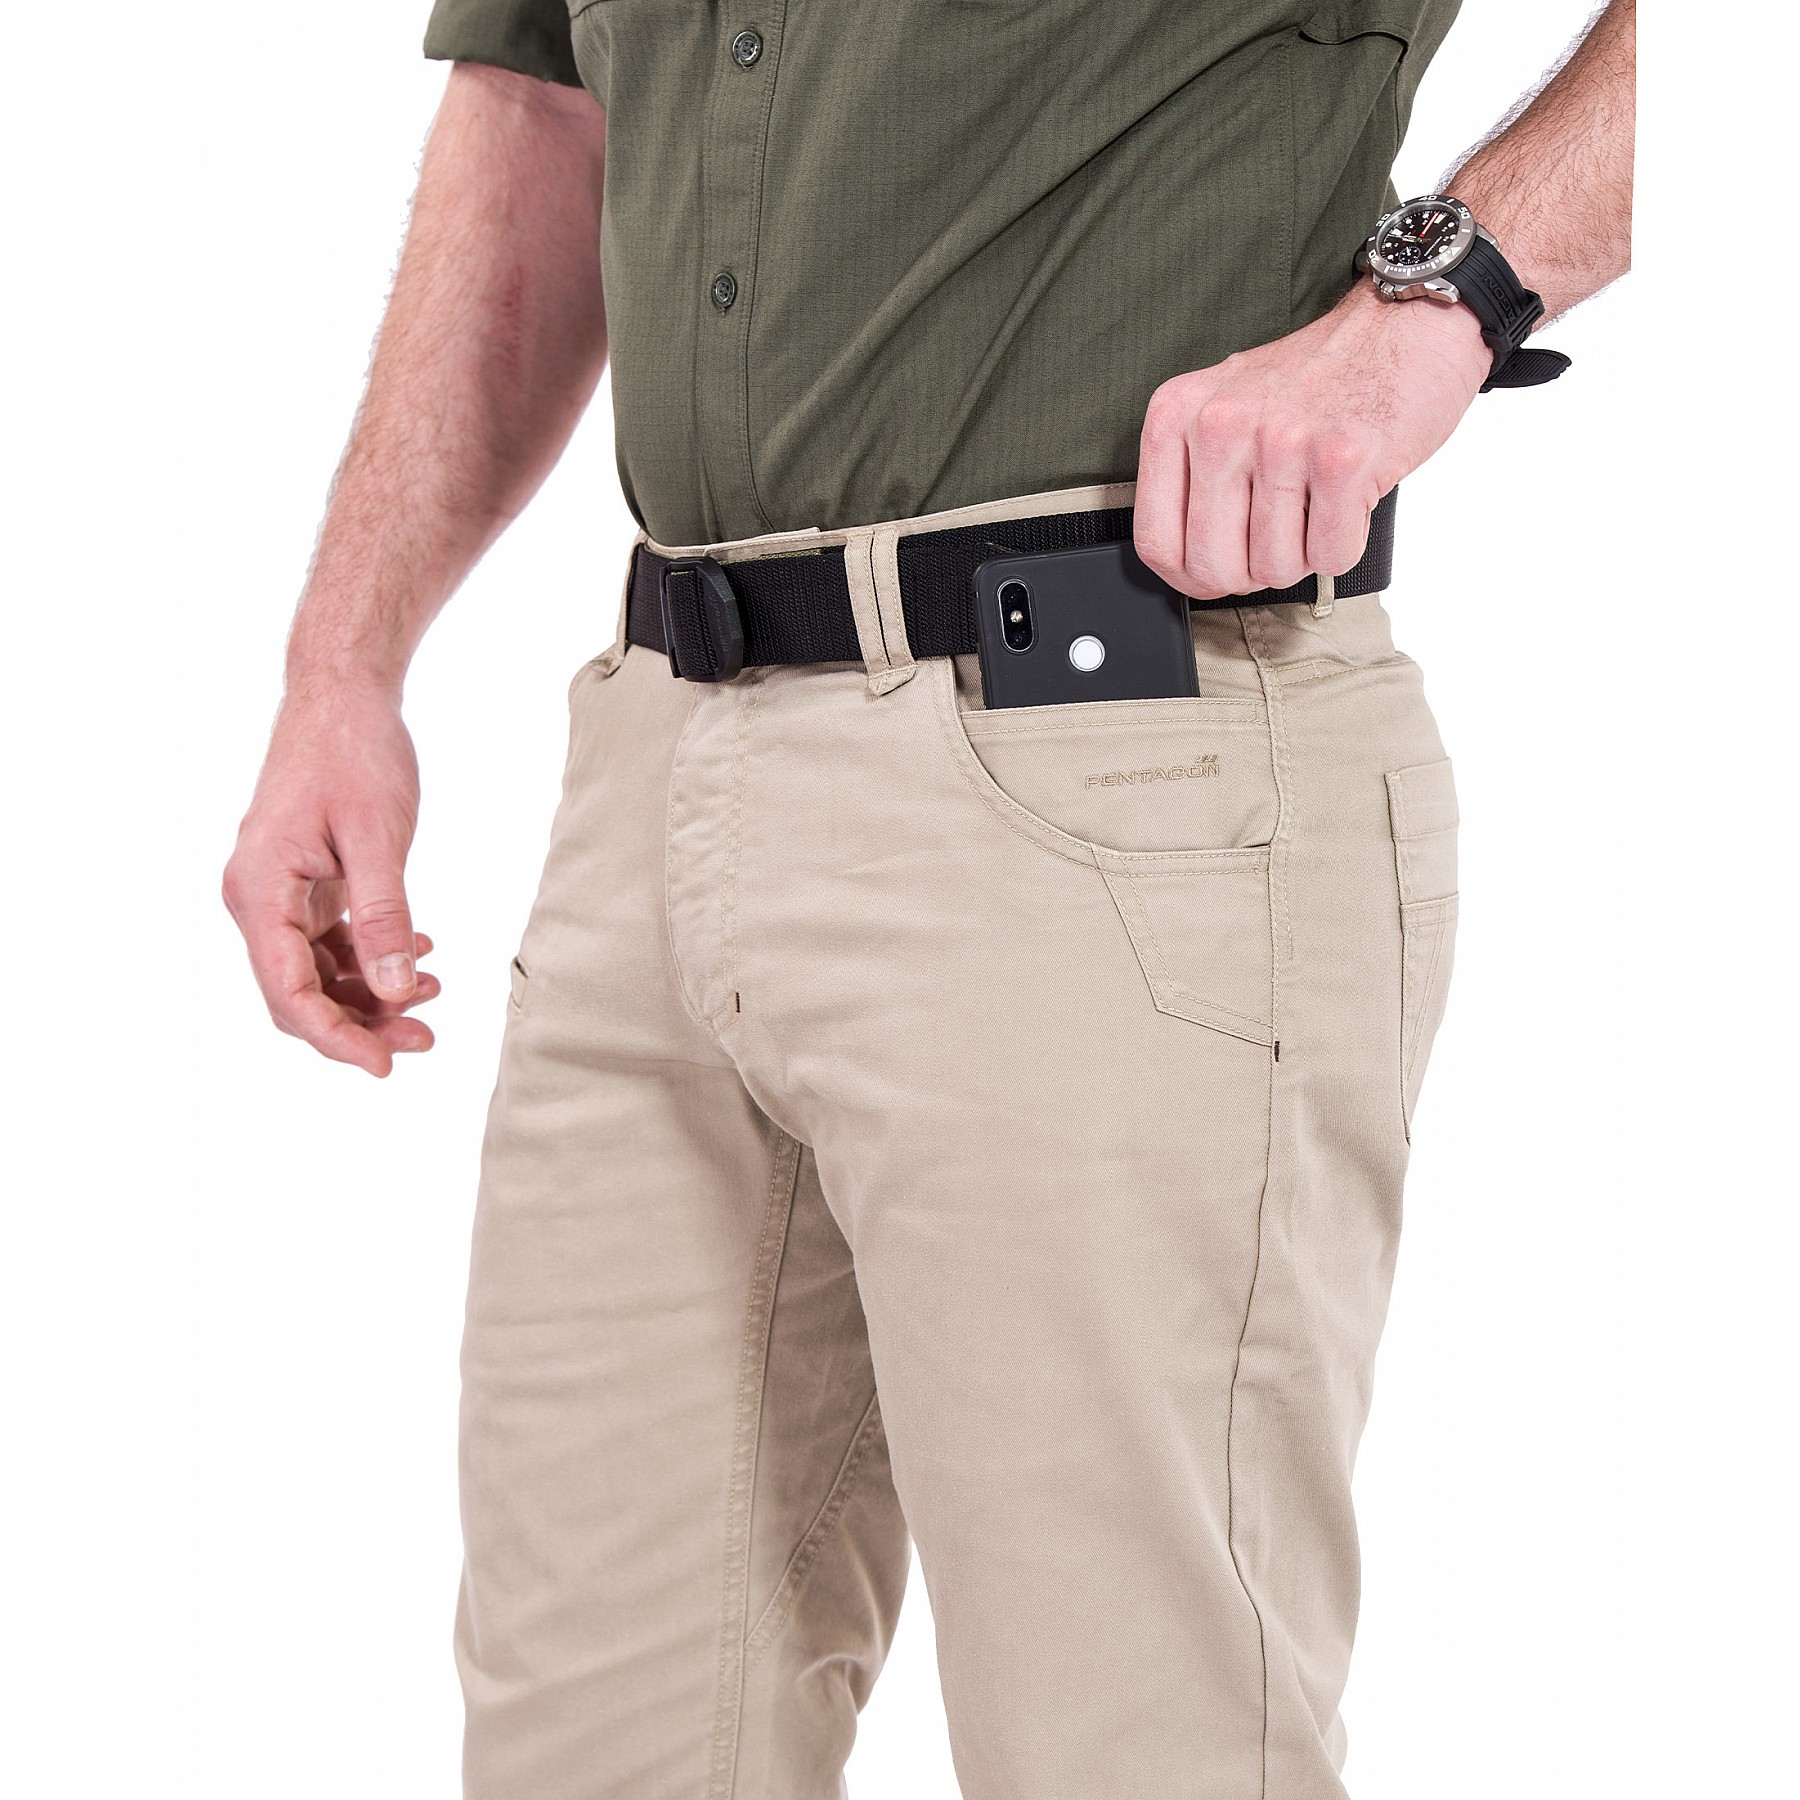 Pentagon Rogue Hero Trousers Mens Tactical Hiking Workwear Chinos Pants Black